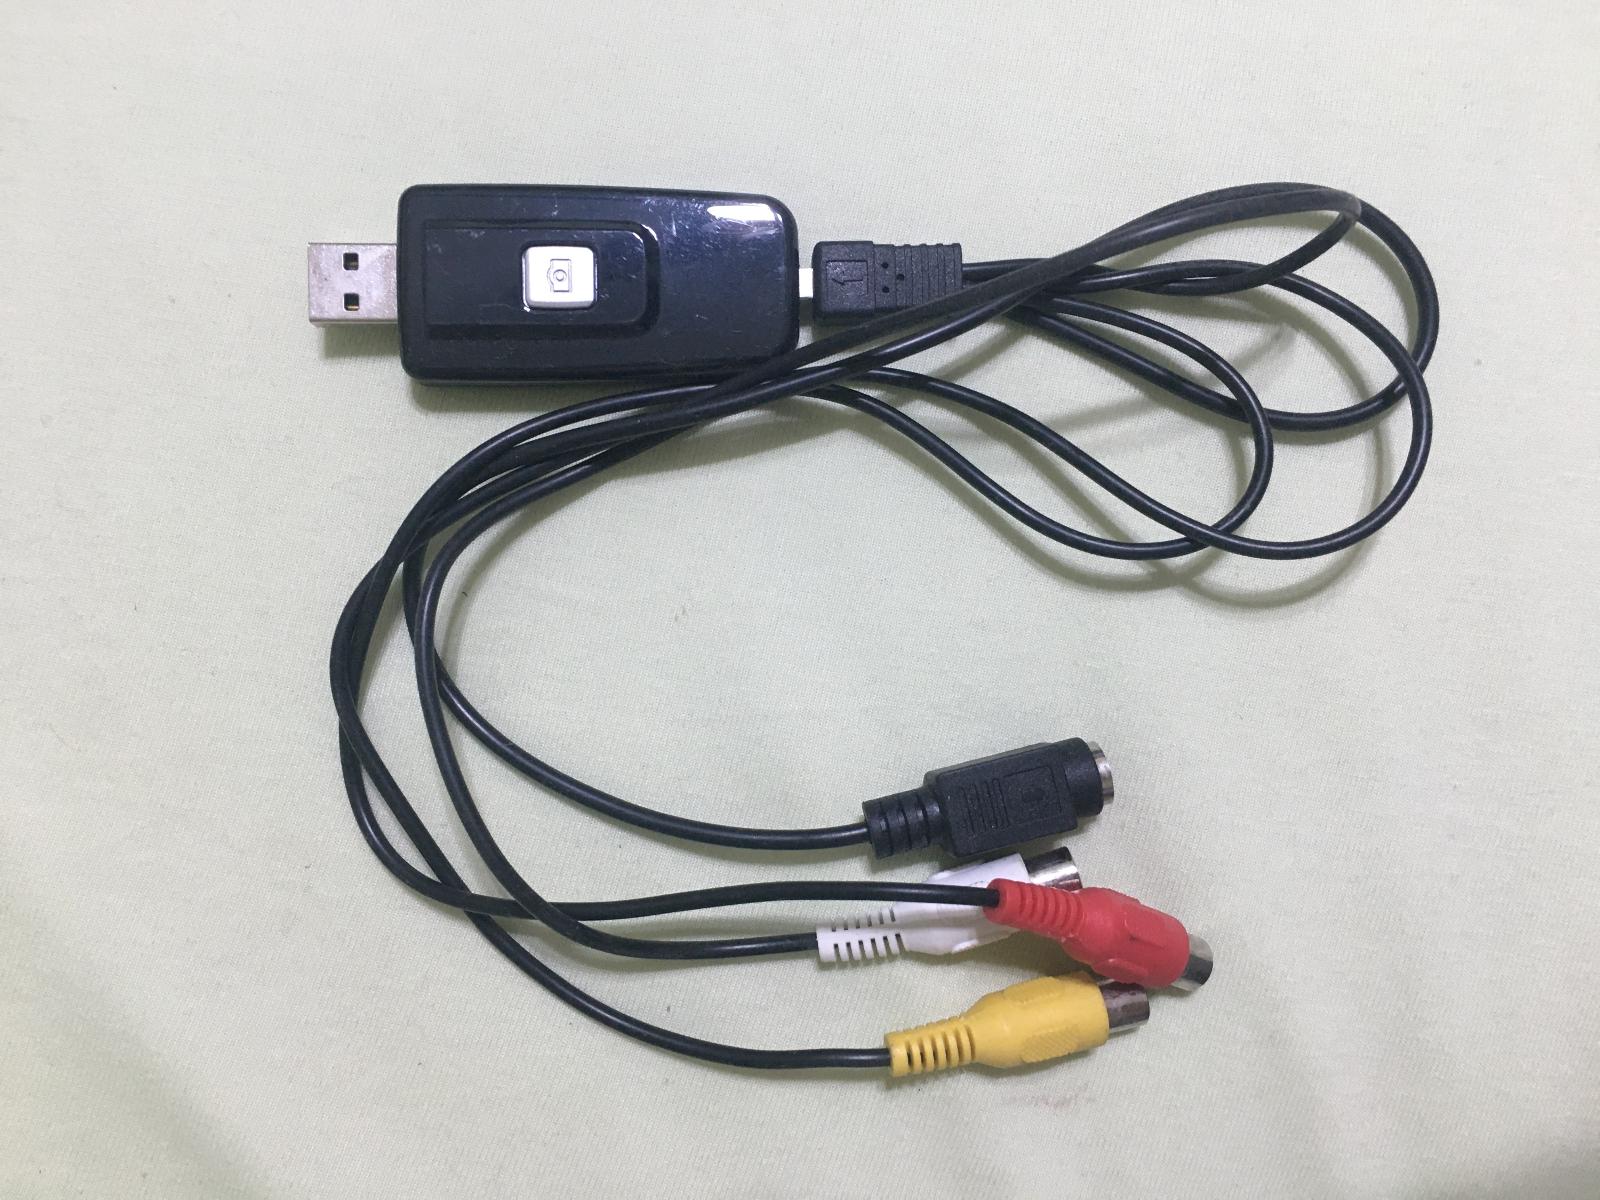 USB video SilverCrest 2.0 A3 | Aukro